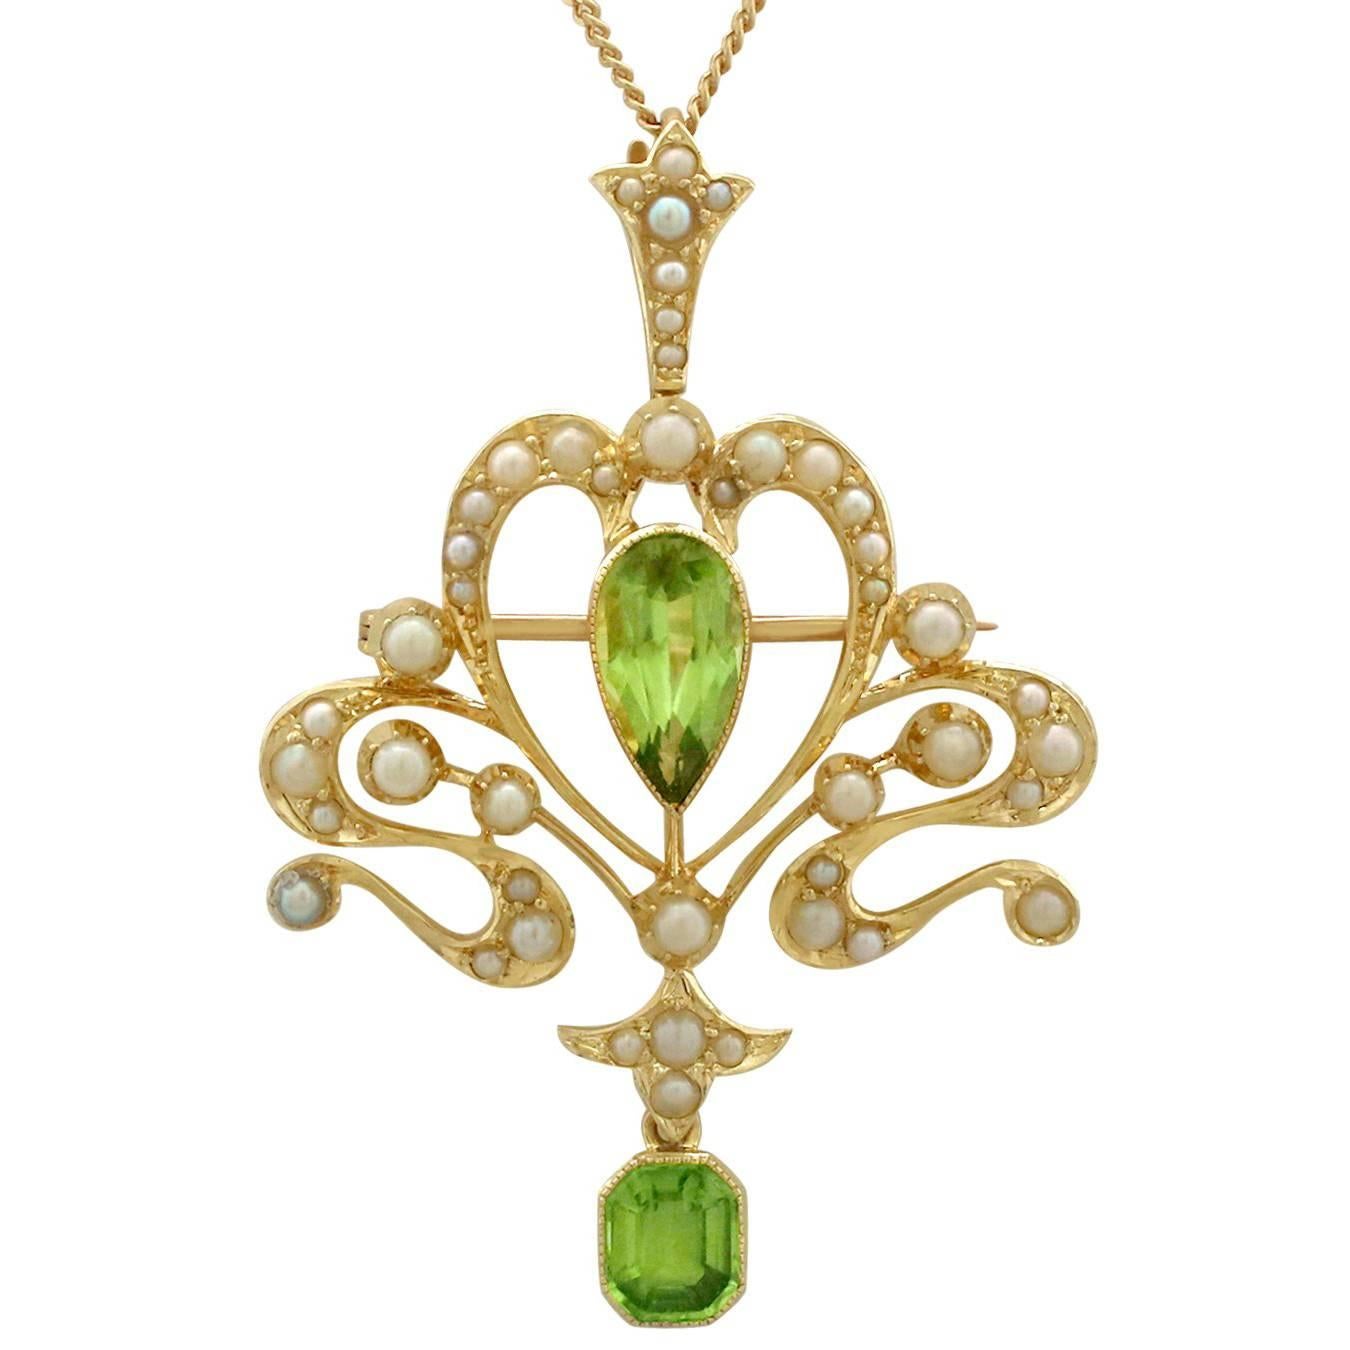 Antique Art Nouveau Style 2.32 Carat Peridot Seed Pearl 15 Karat Gold Pendant